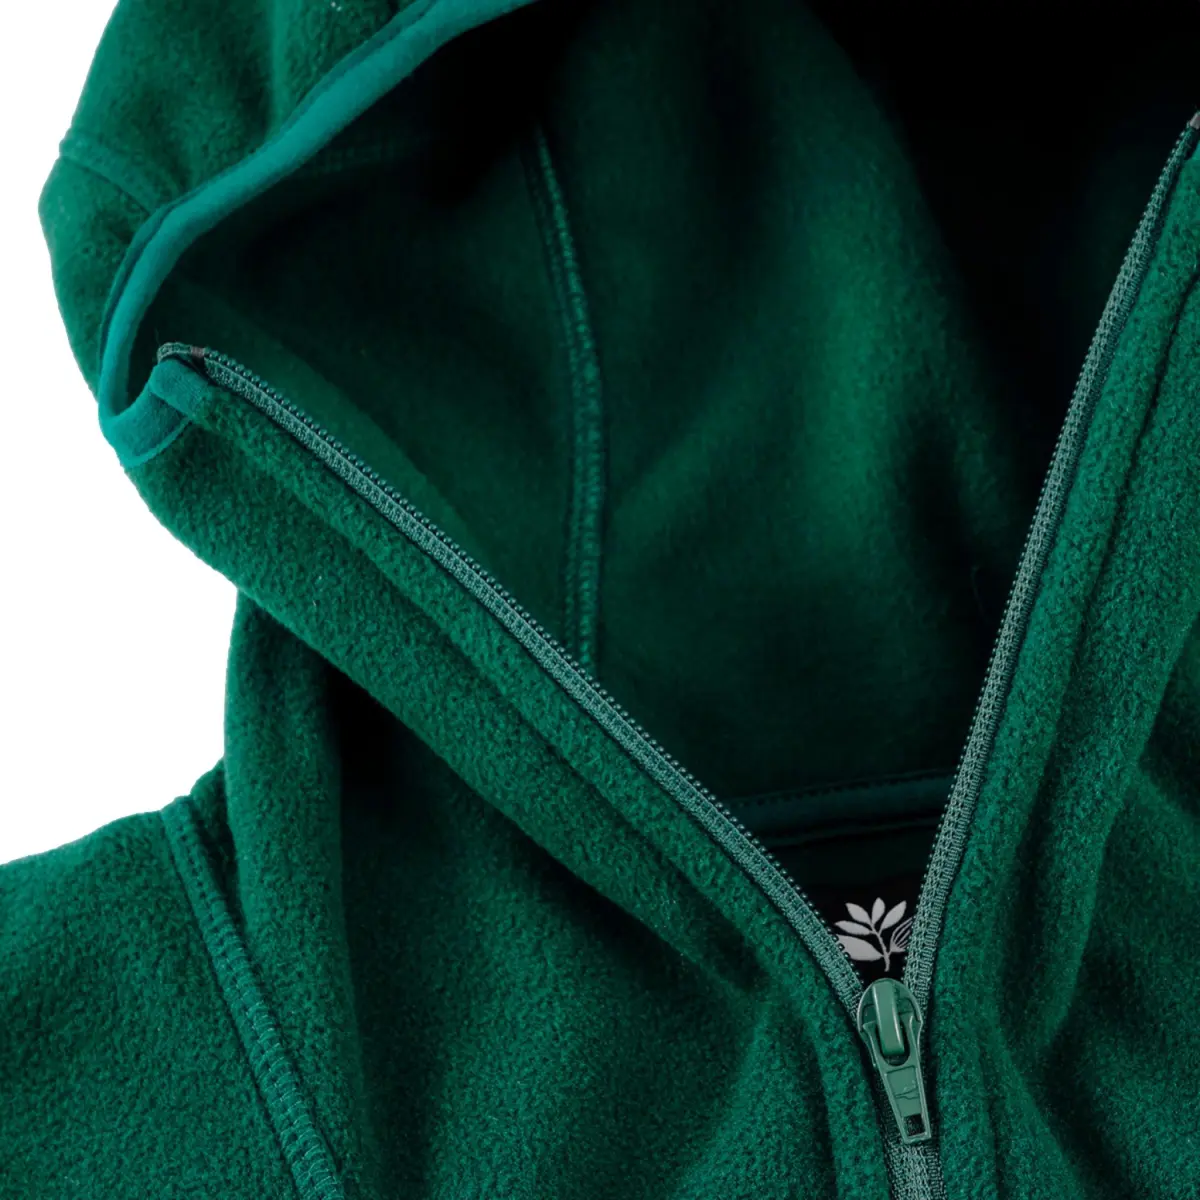 Antartic zipped hoodie green magenta